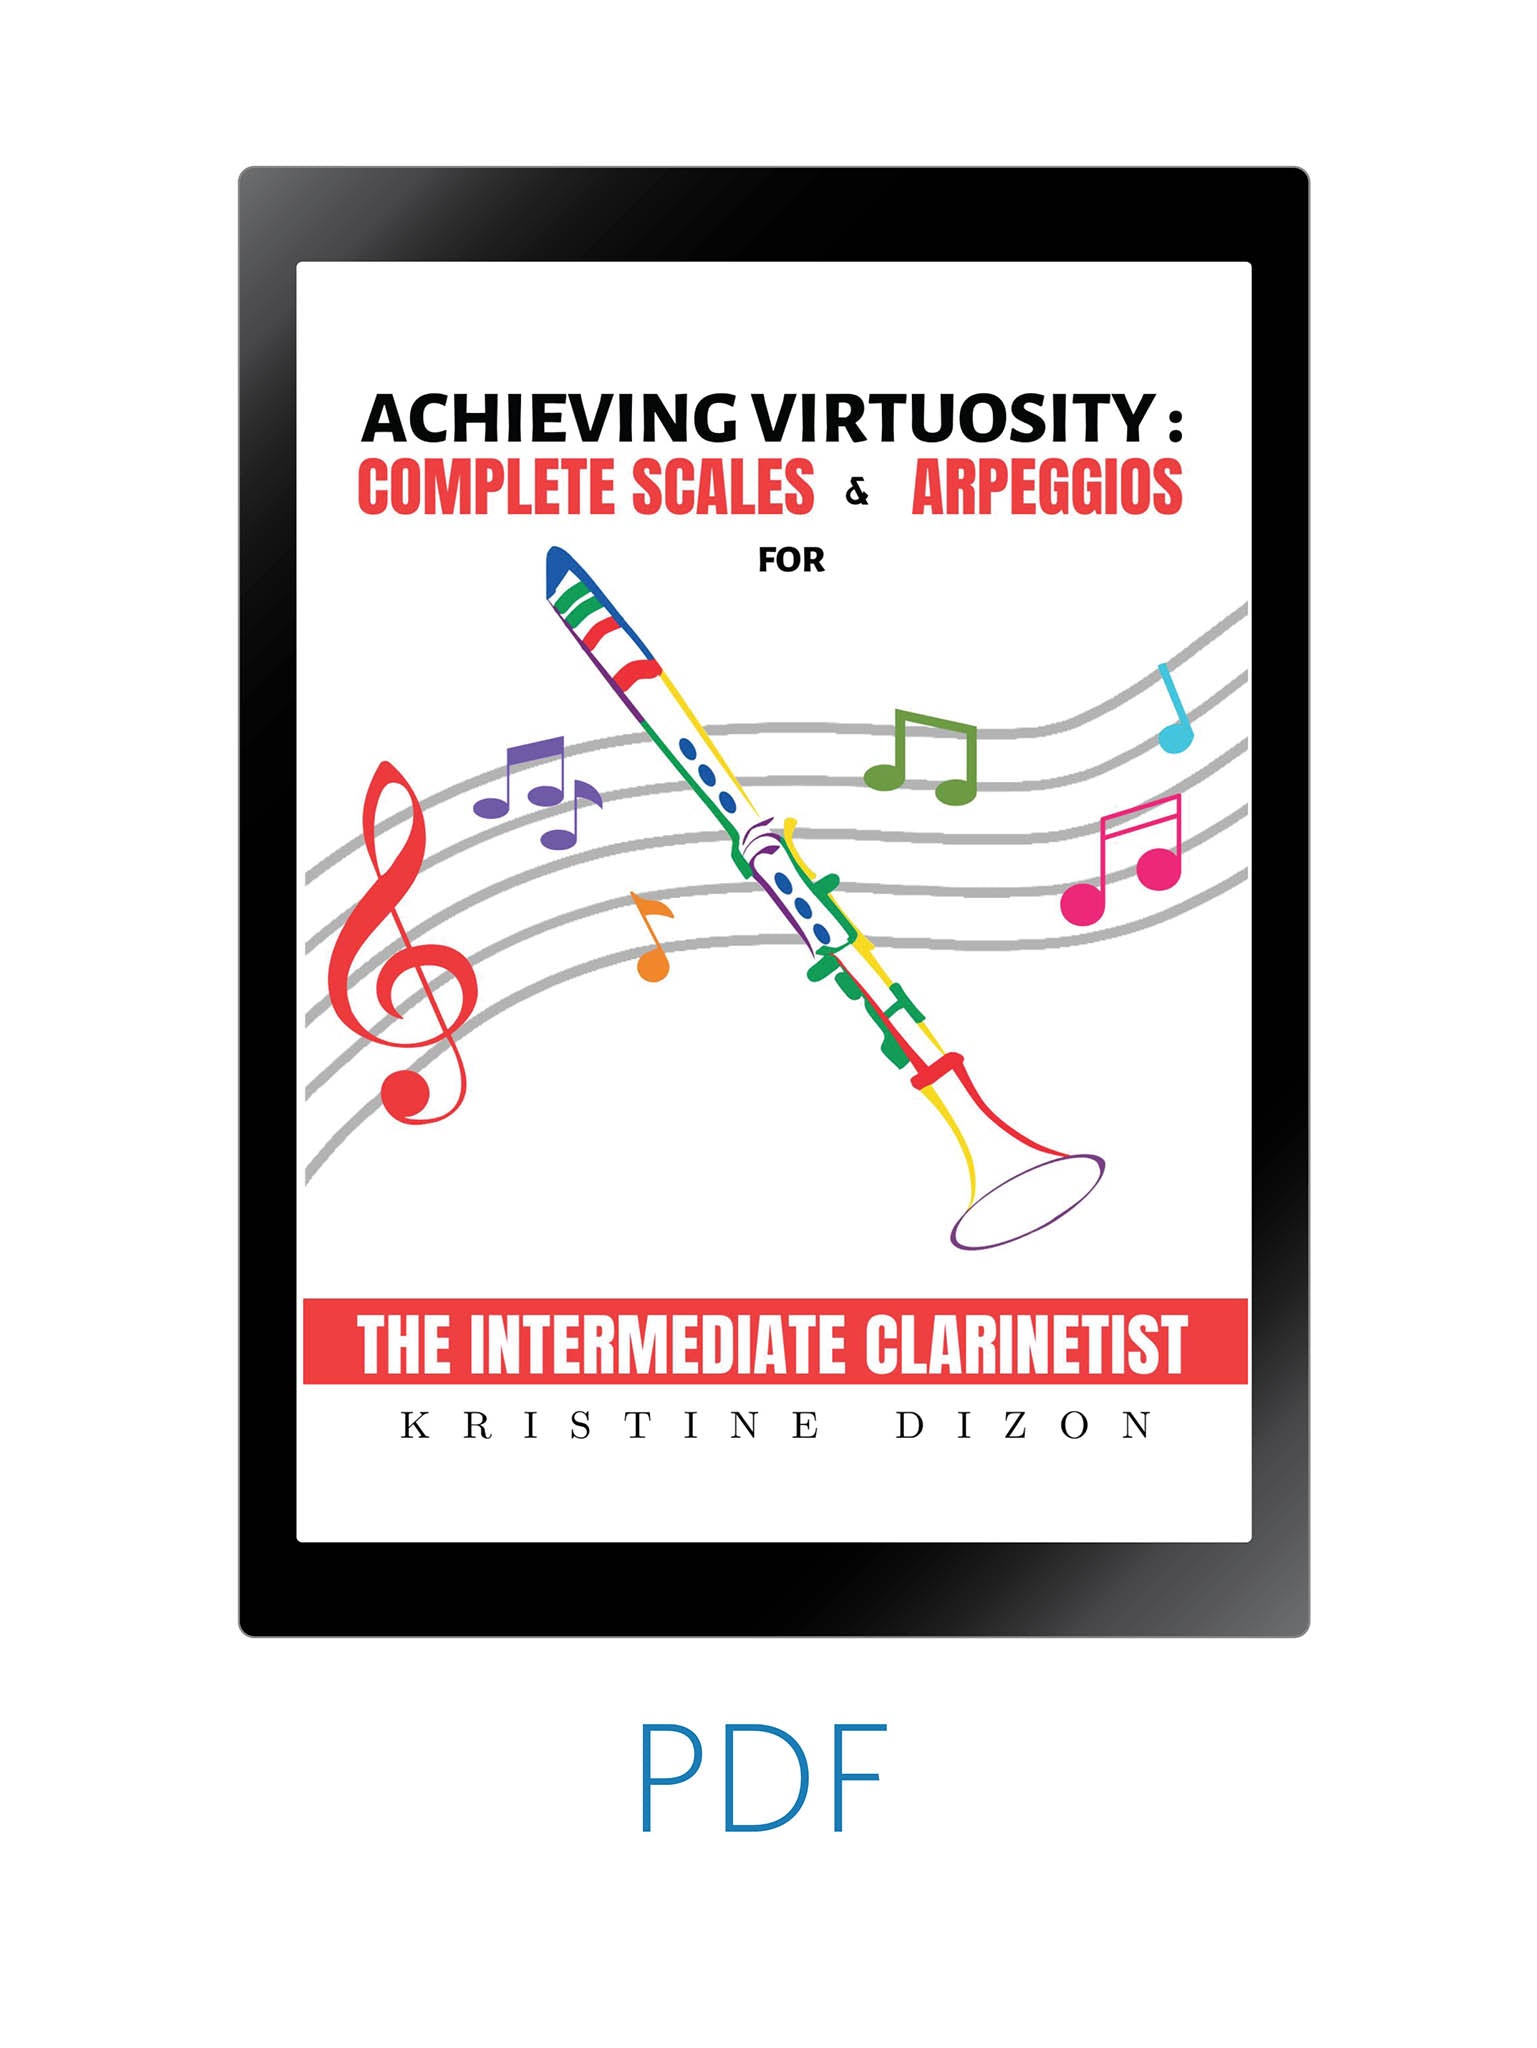 Dizon Achieving Virtuosity: Complete Scales & Arpeggios Intermediate Clarinetist digital PDF format